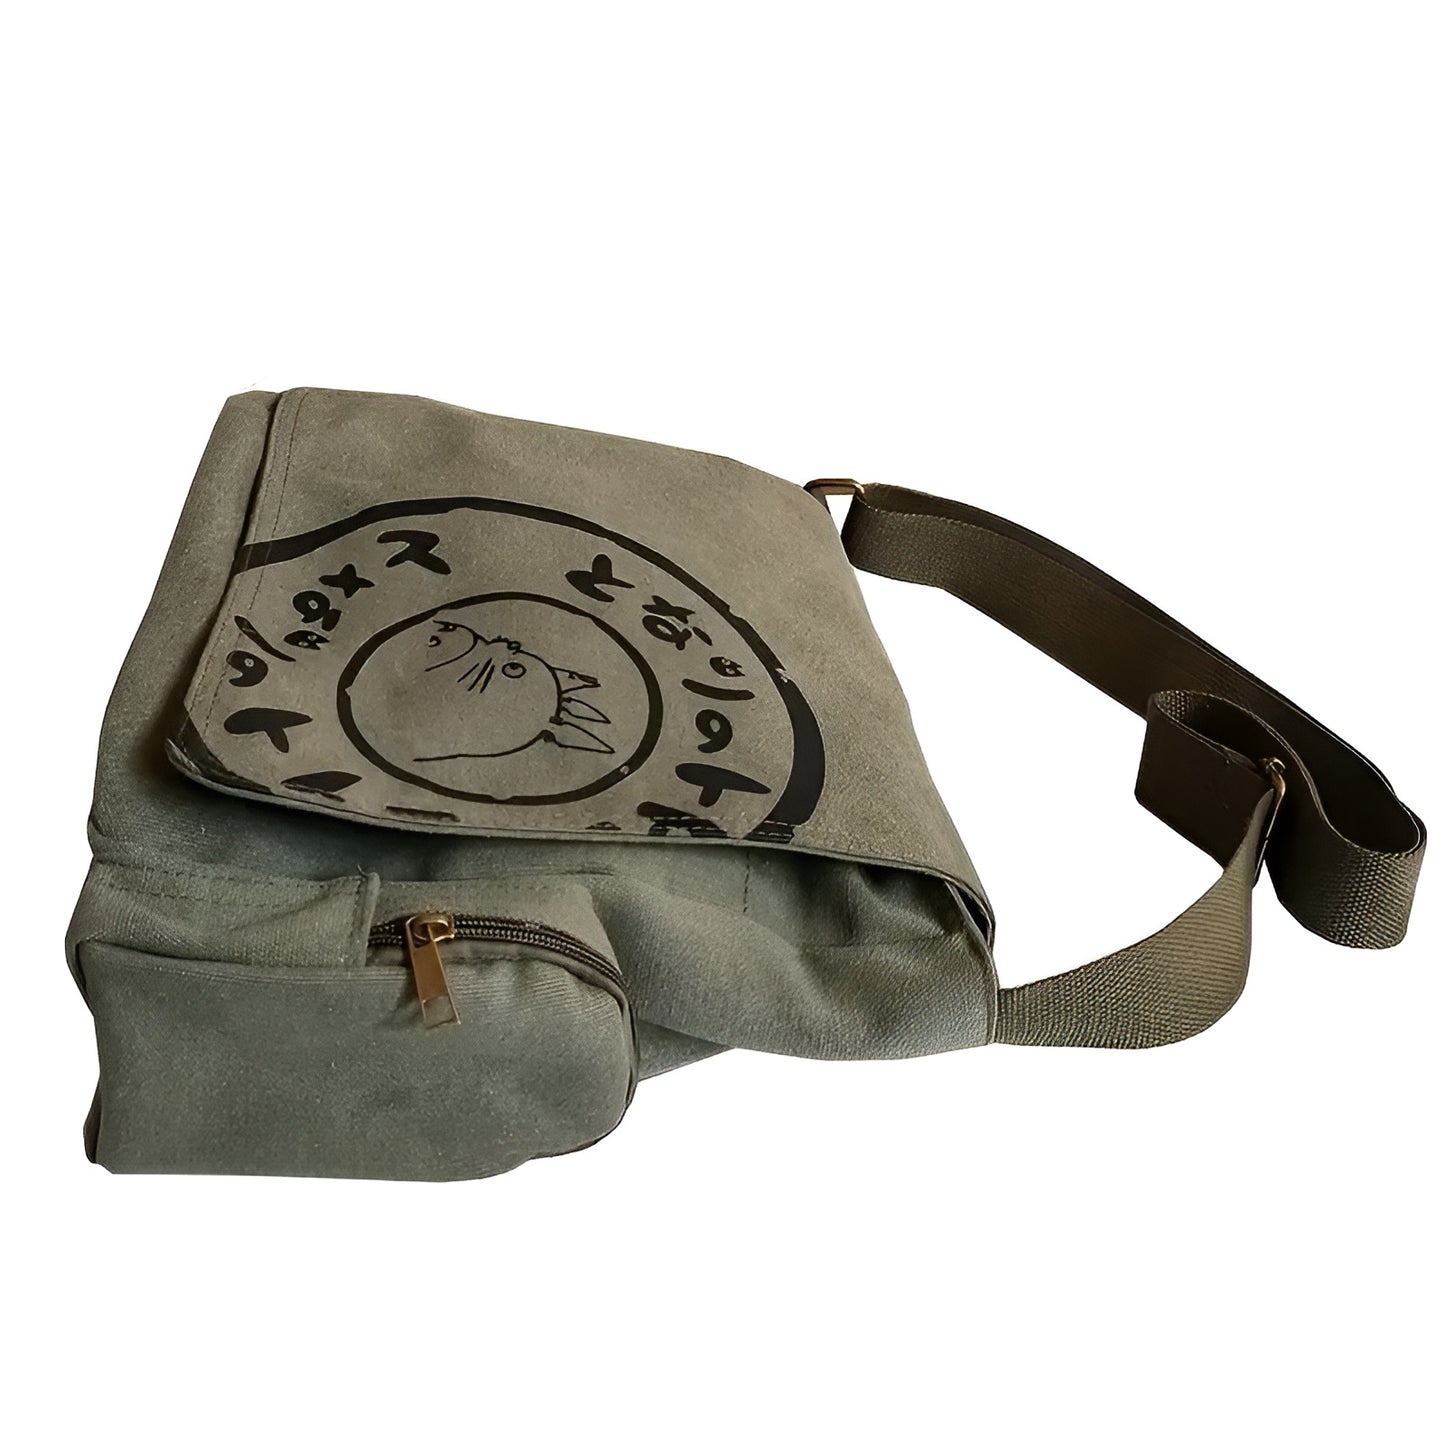 Totoro Messenger Bag